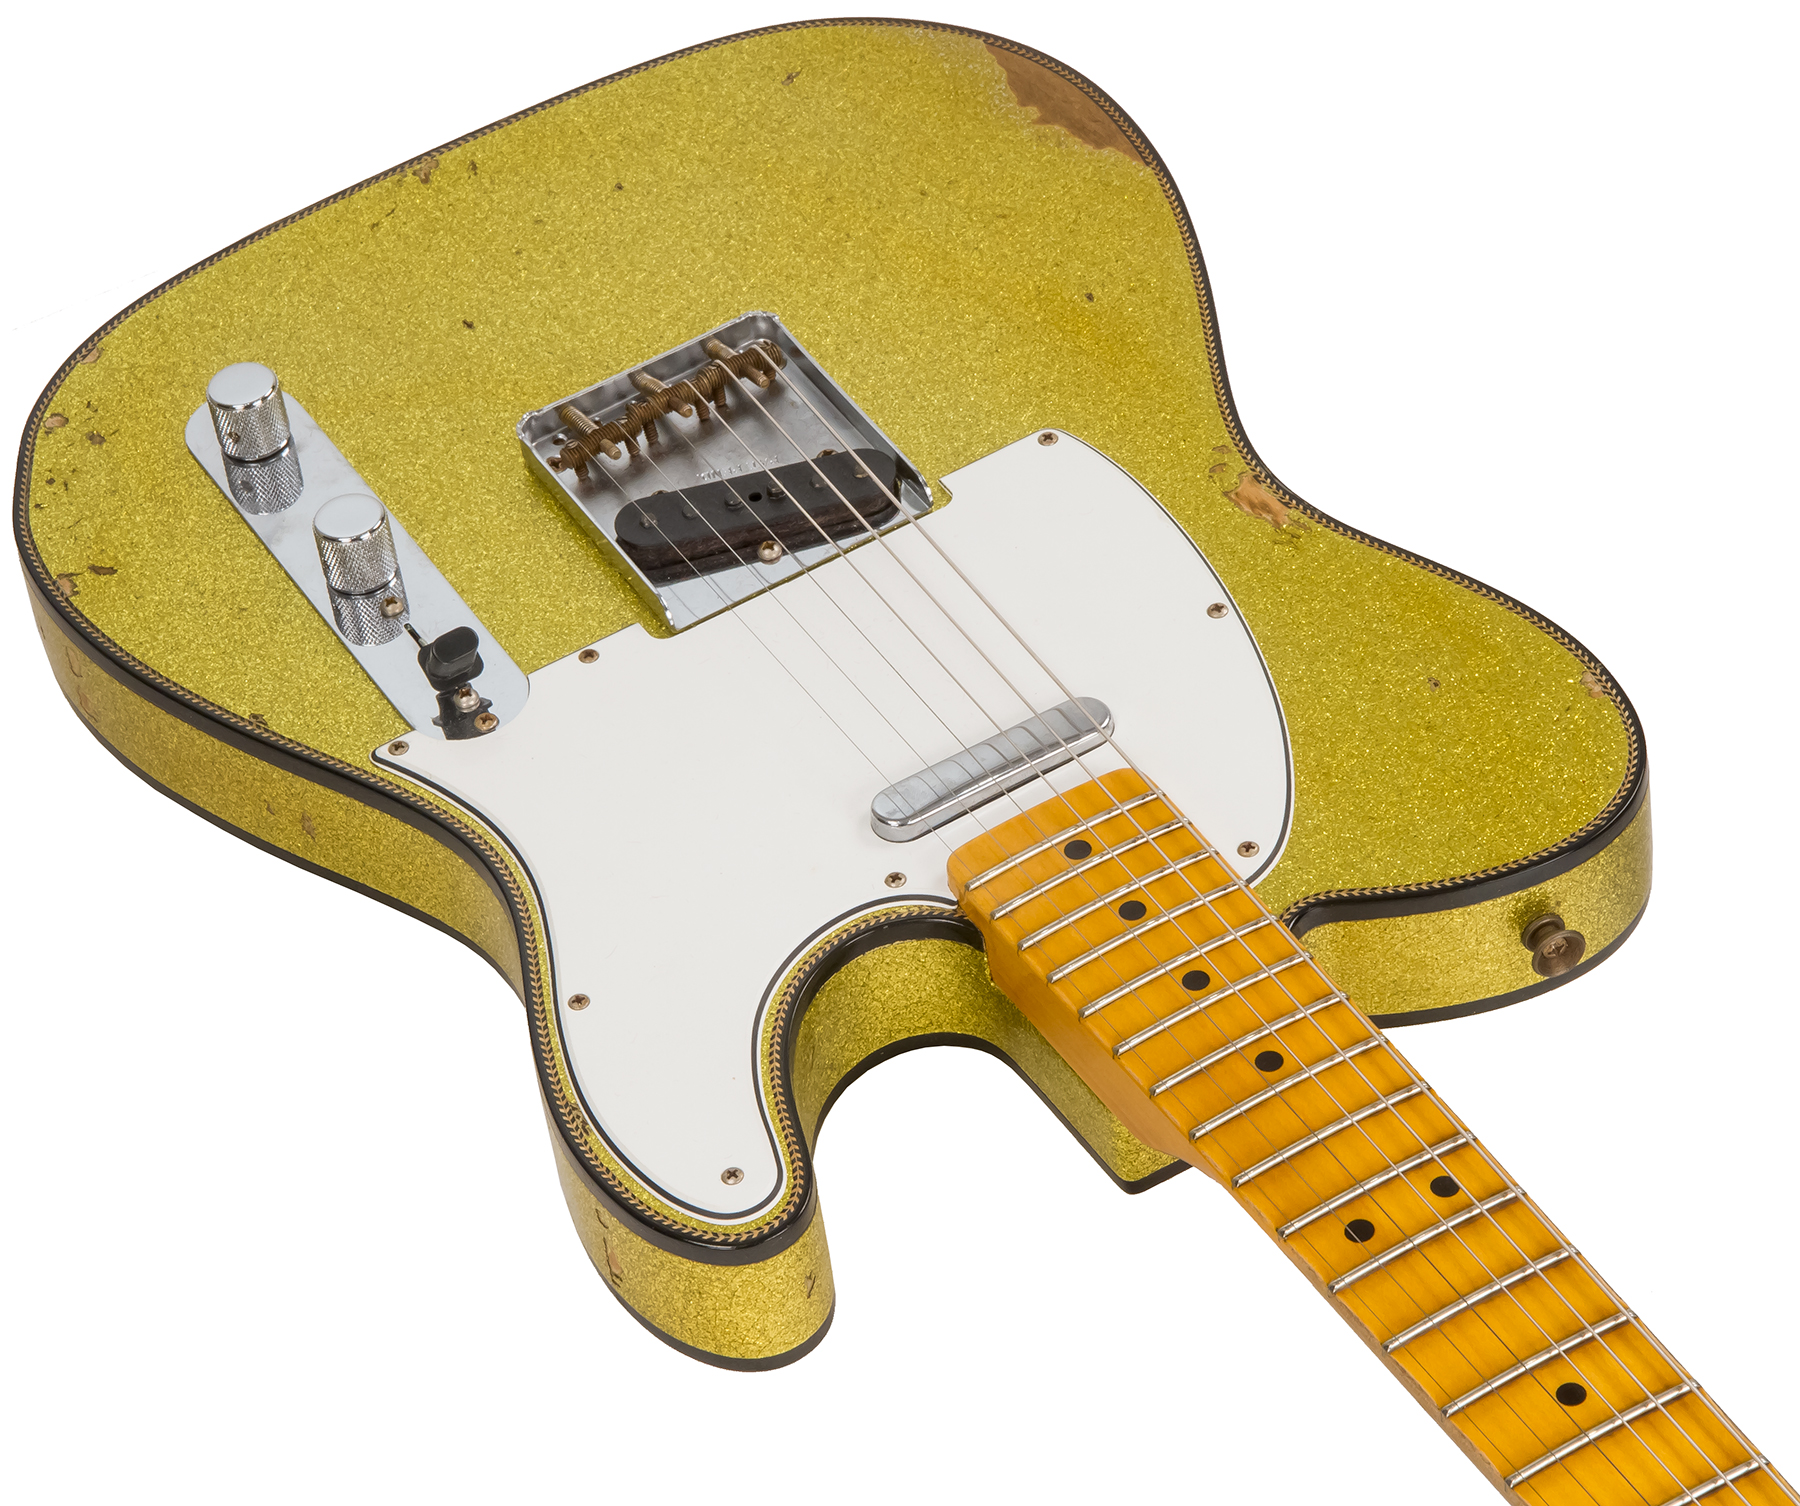 Fender Custom Shop Tele Custom 1963 2020 Ltd Rw #cz545983 - Relic Chartreuse Sparkle - Tel shape electric guitar - Variation 2